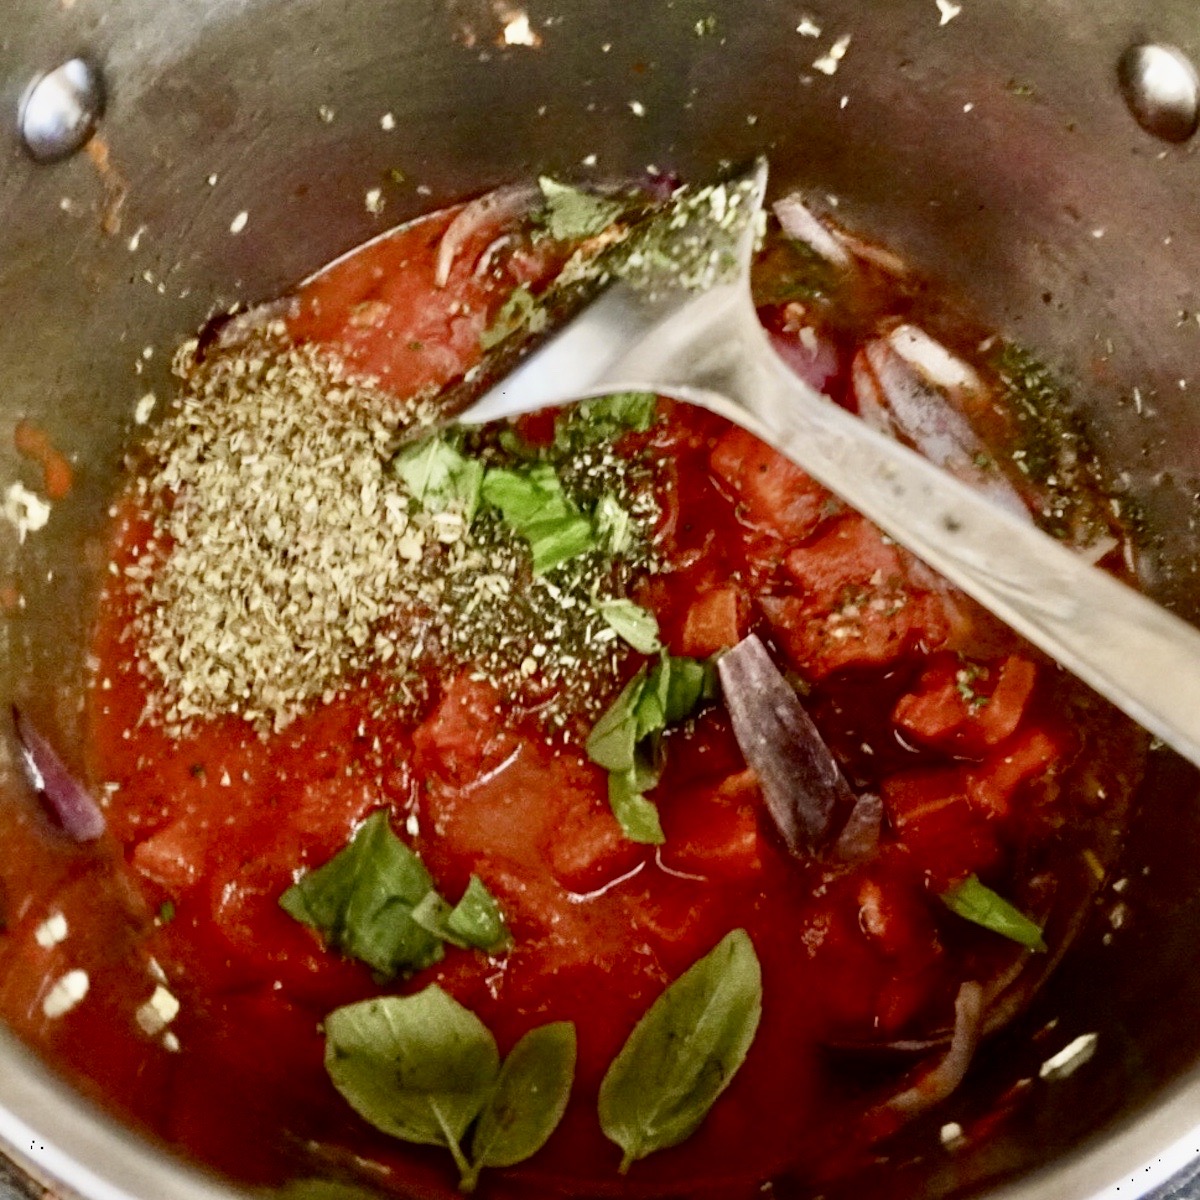 Preparing tomato sauce for pasta